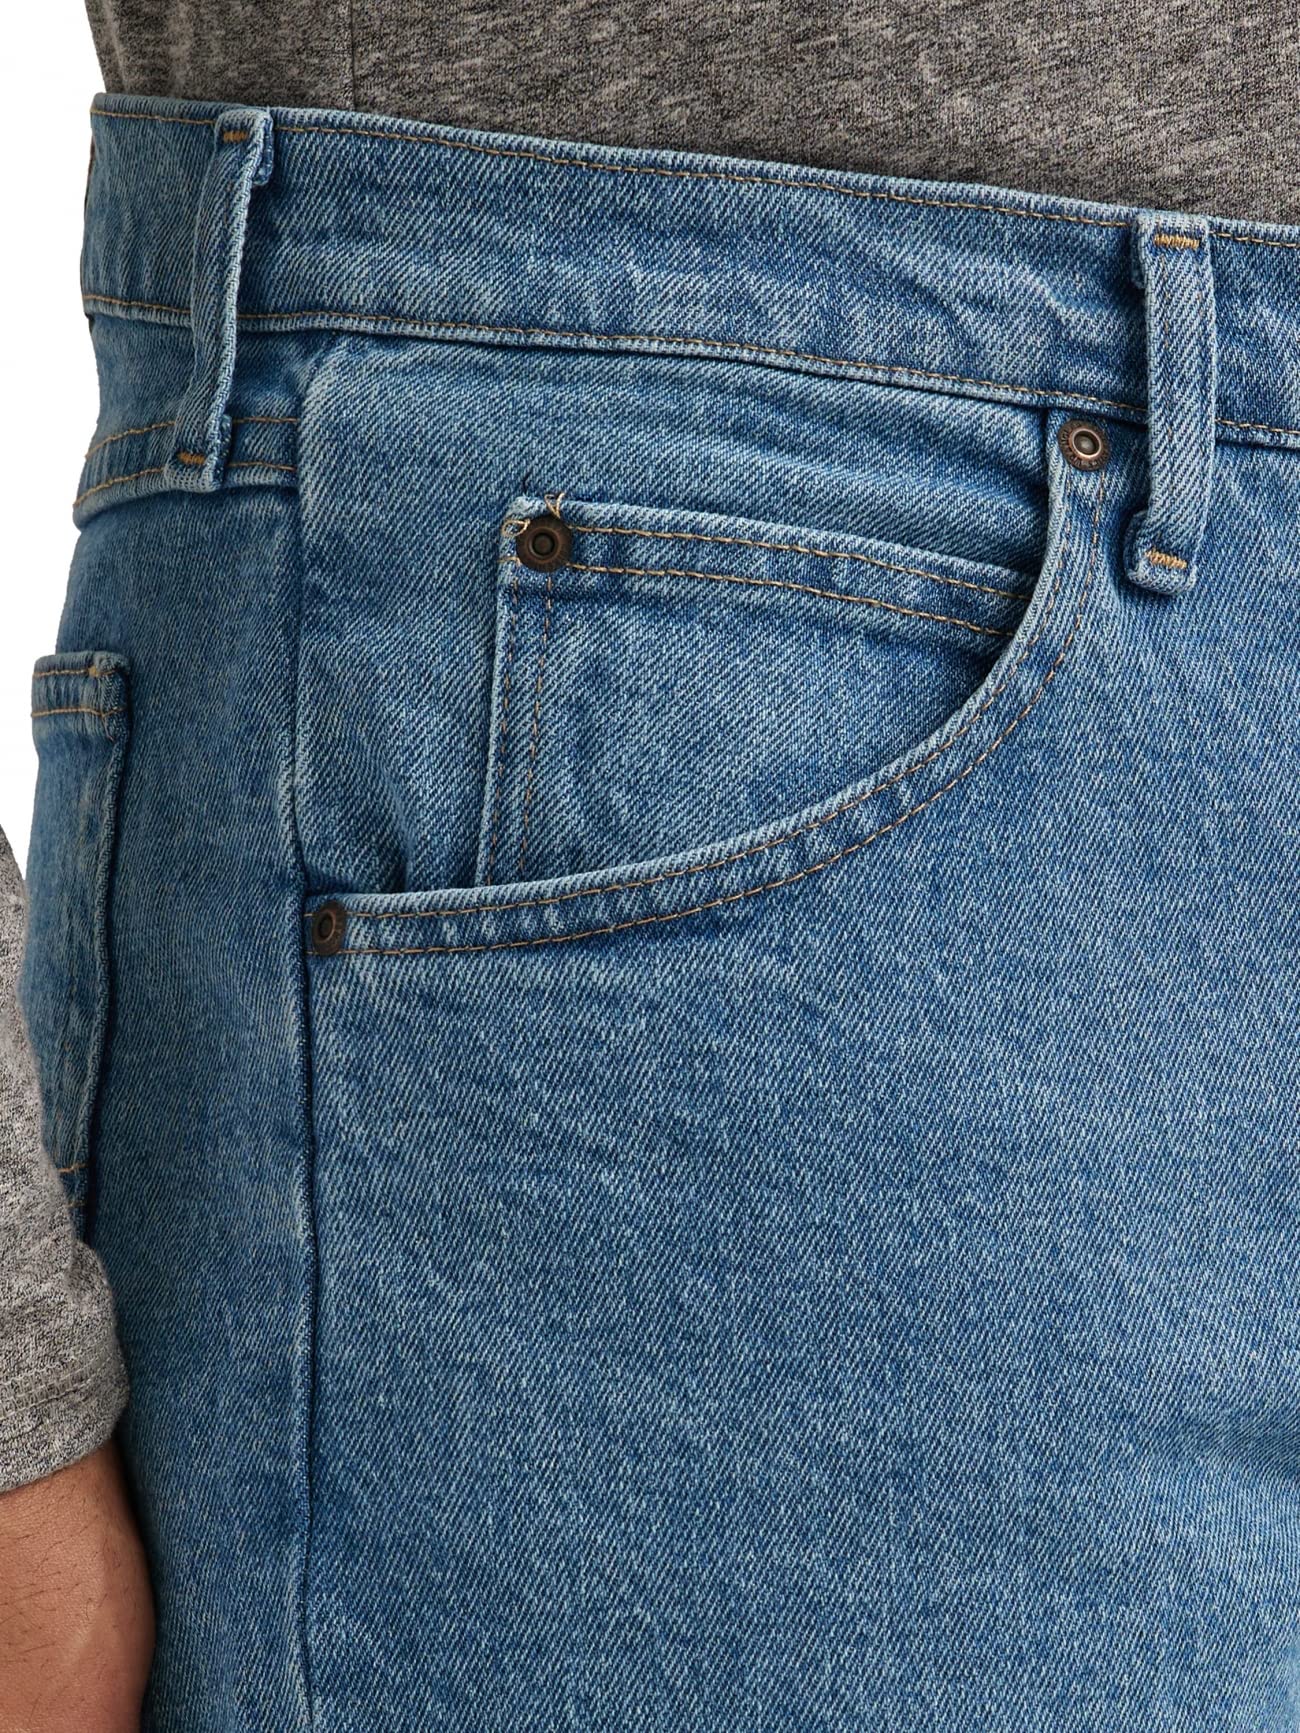 Wrangler Authentics Men's Classic 5-Pocket Relaxed Fit Jean, Light Stonewash Flex, 38W x 28L